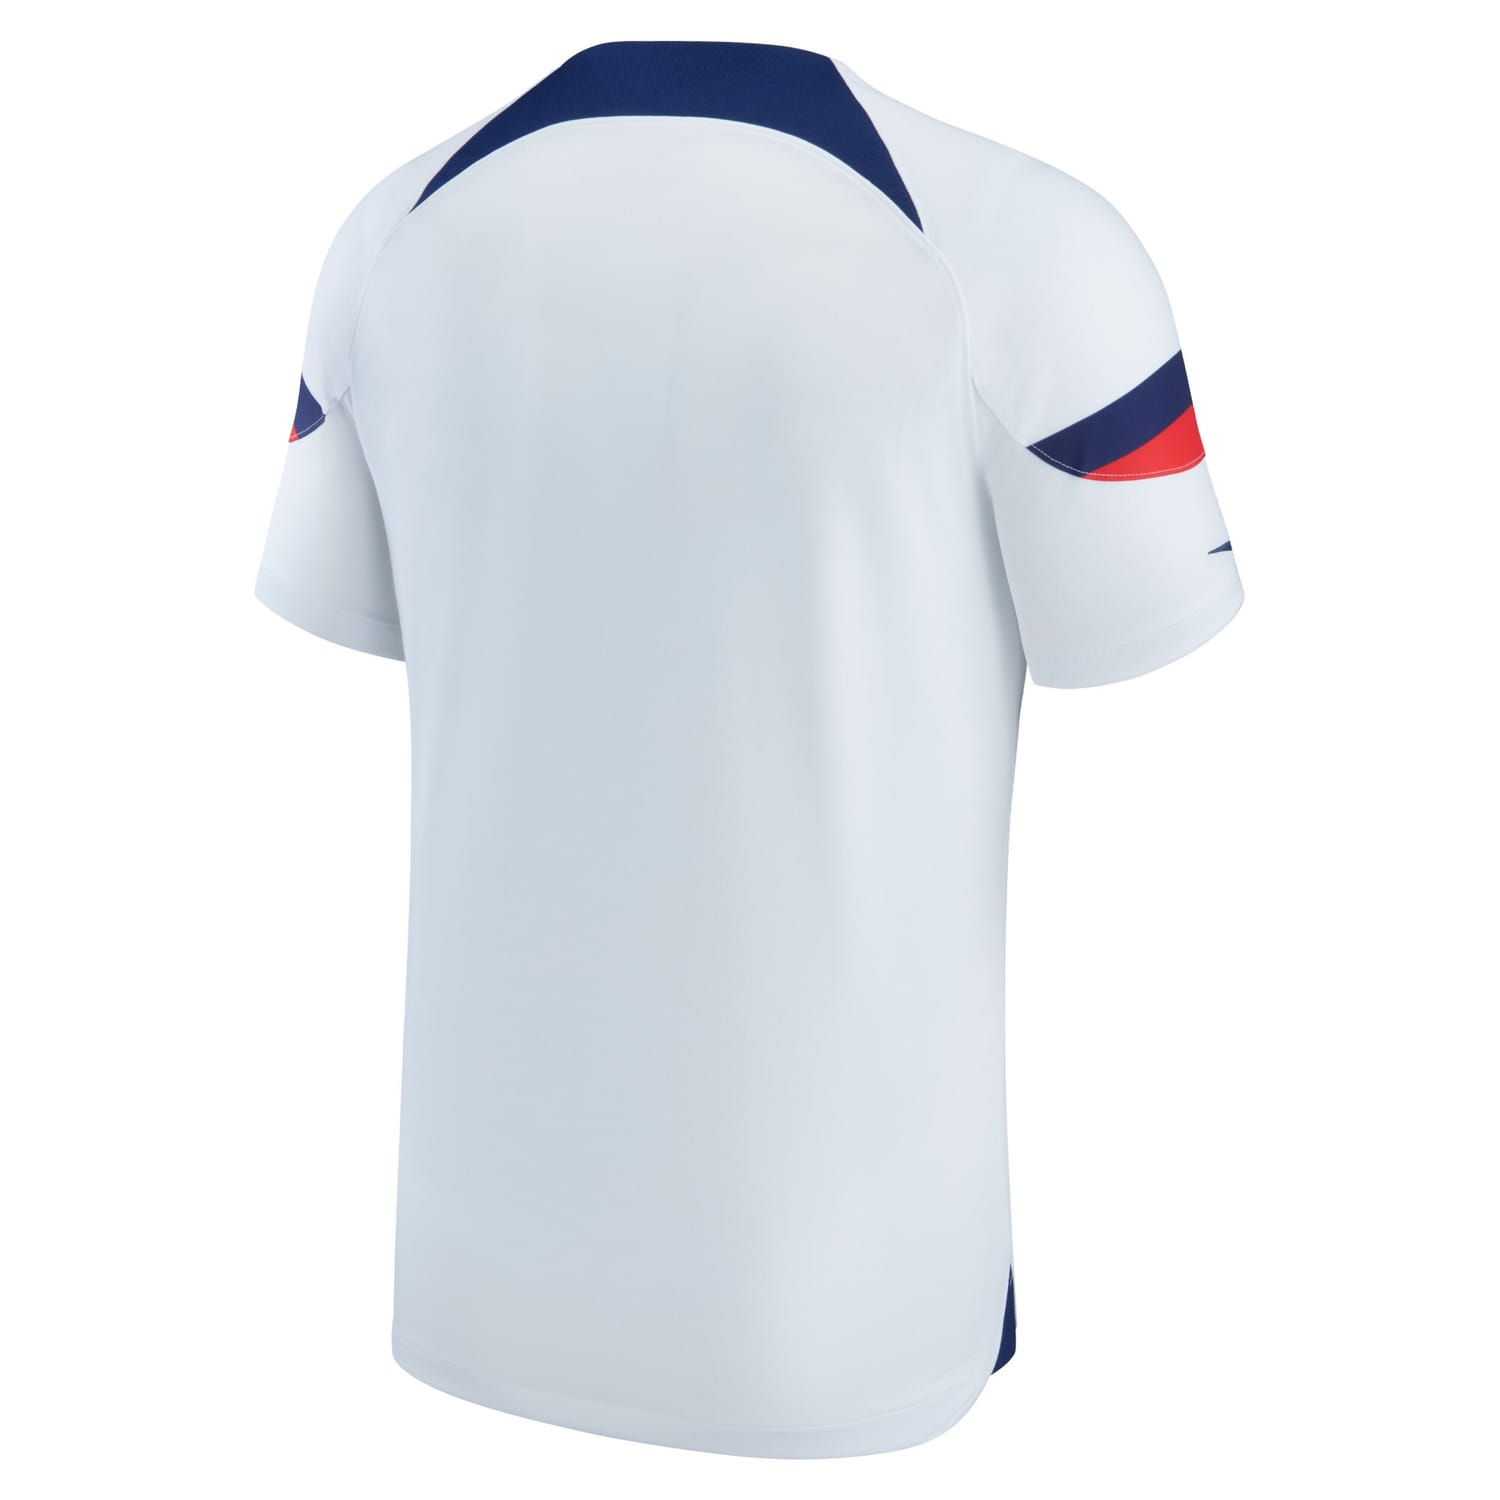 USMNT Home Jersey Shirt White 2022-23 for Men